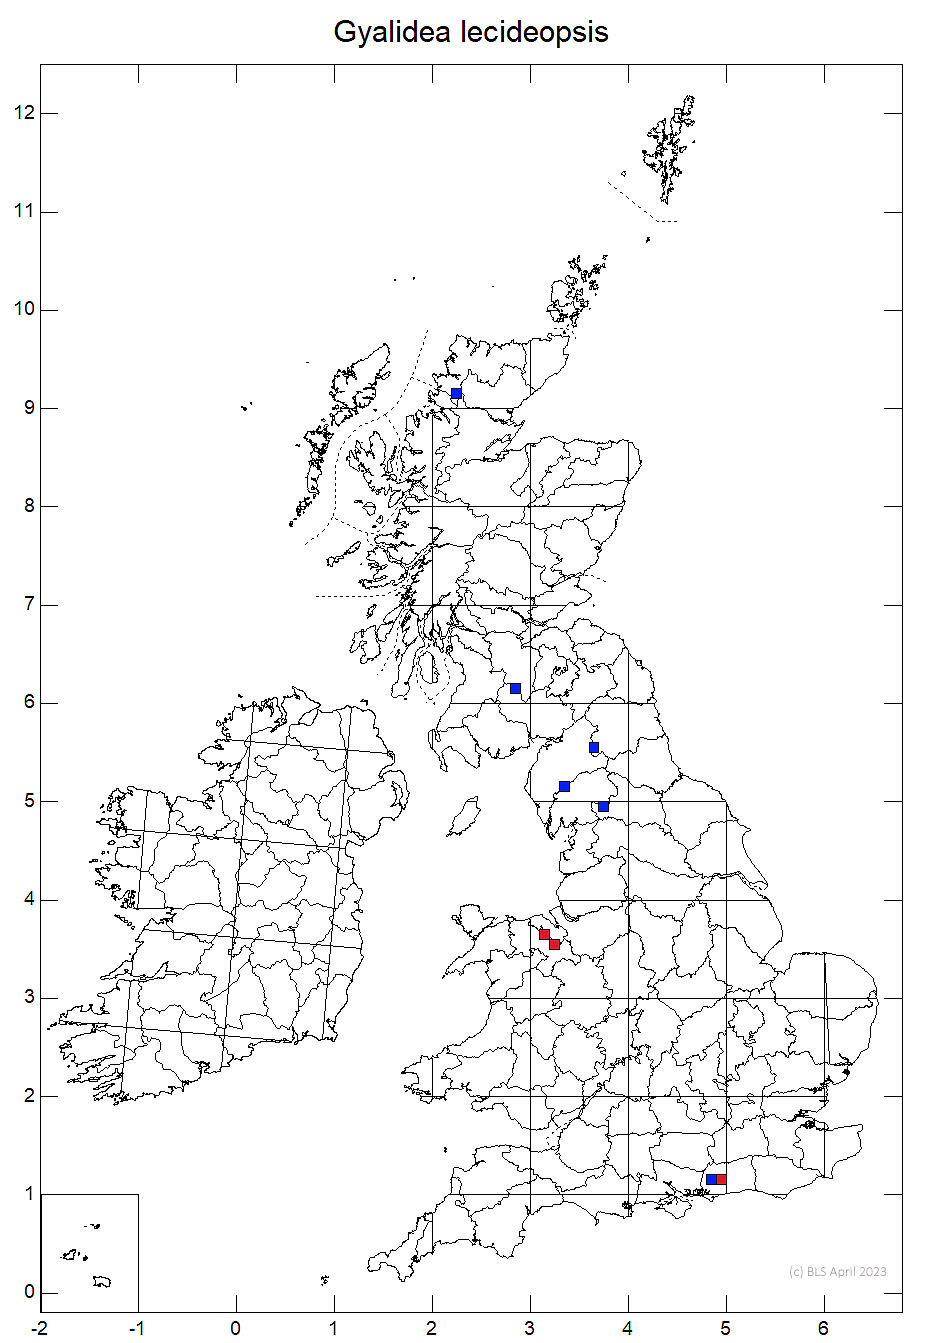 Gyalidea lecideopsis 10km sq distribution map